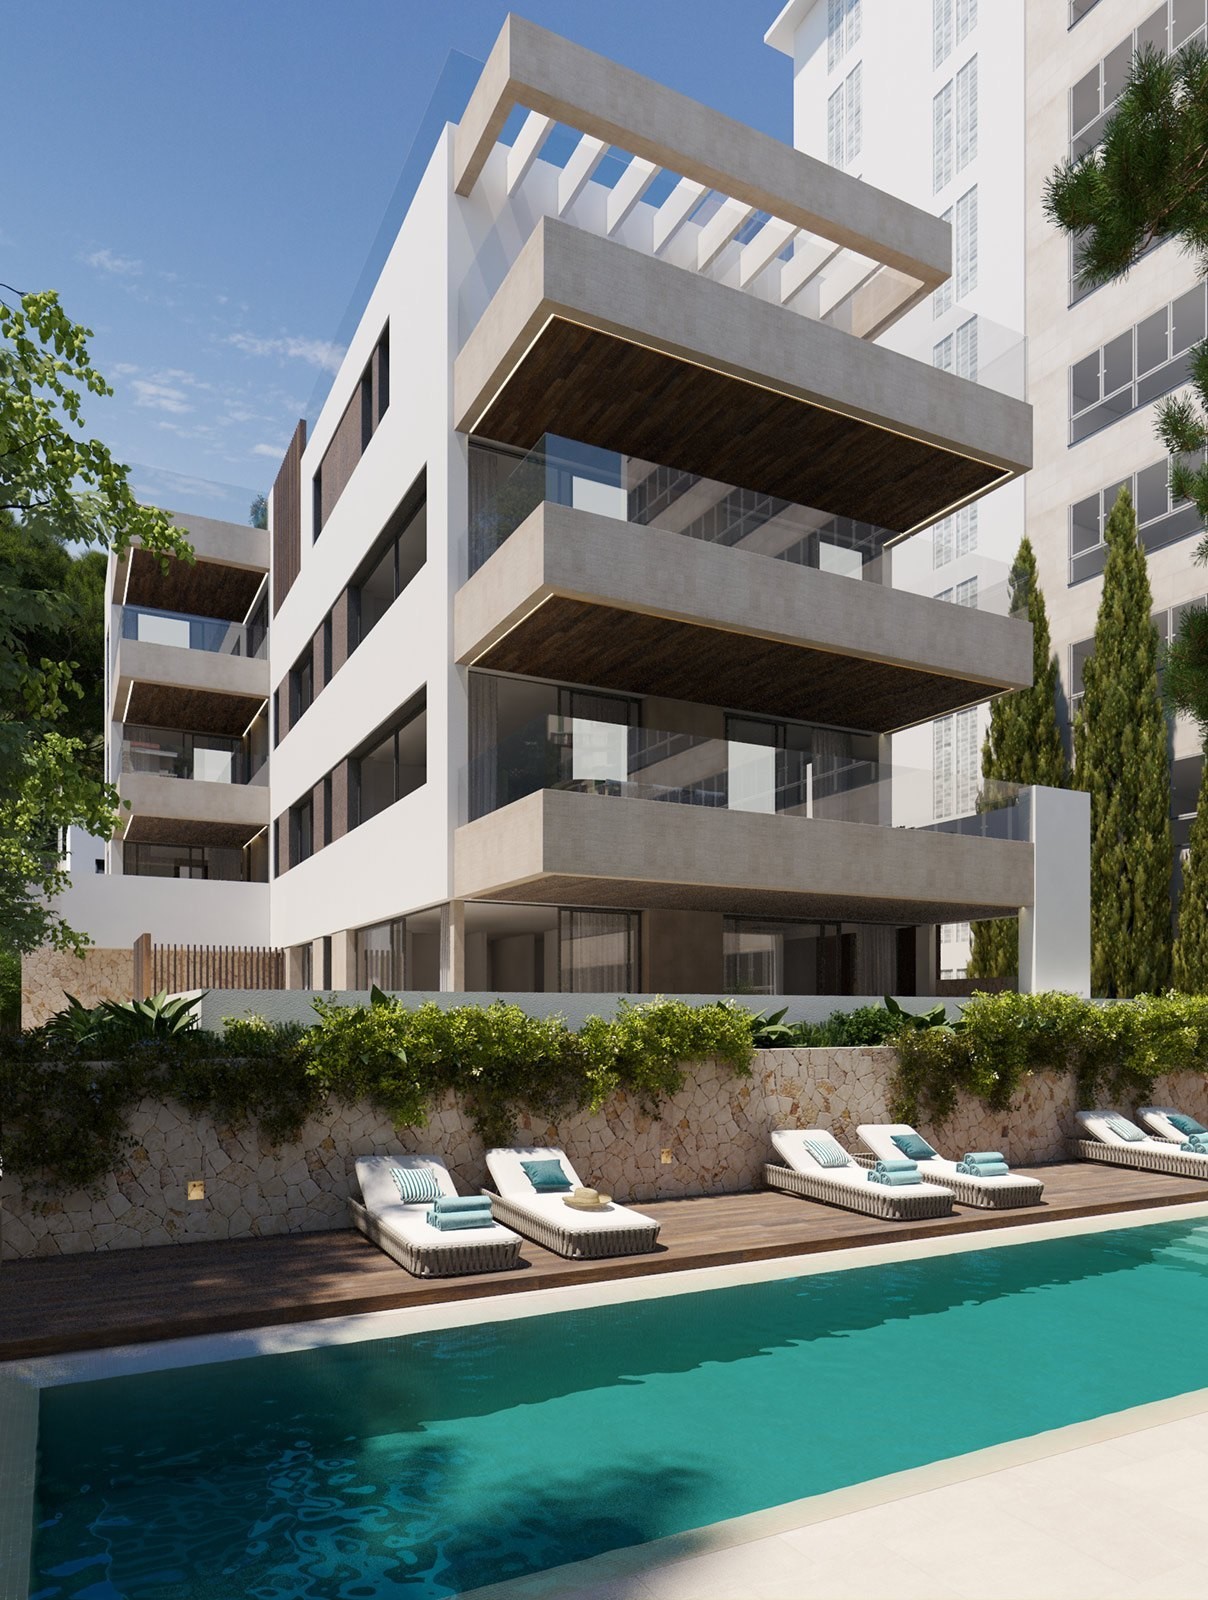 Appartement neuf avec jardin, grande terrasse et piscine commune, Palma